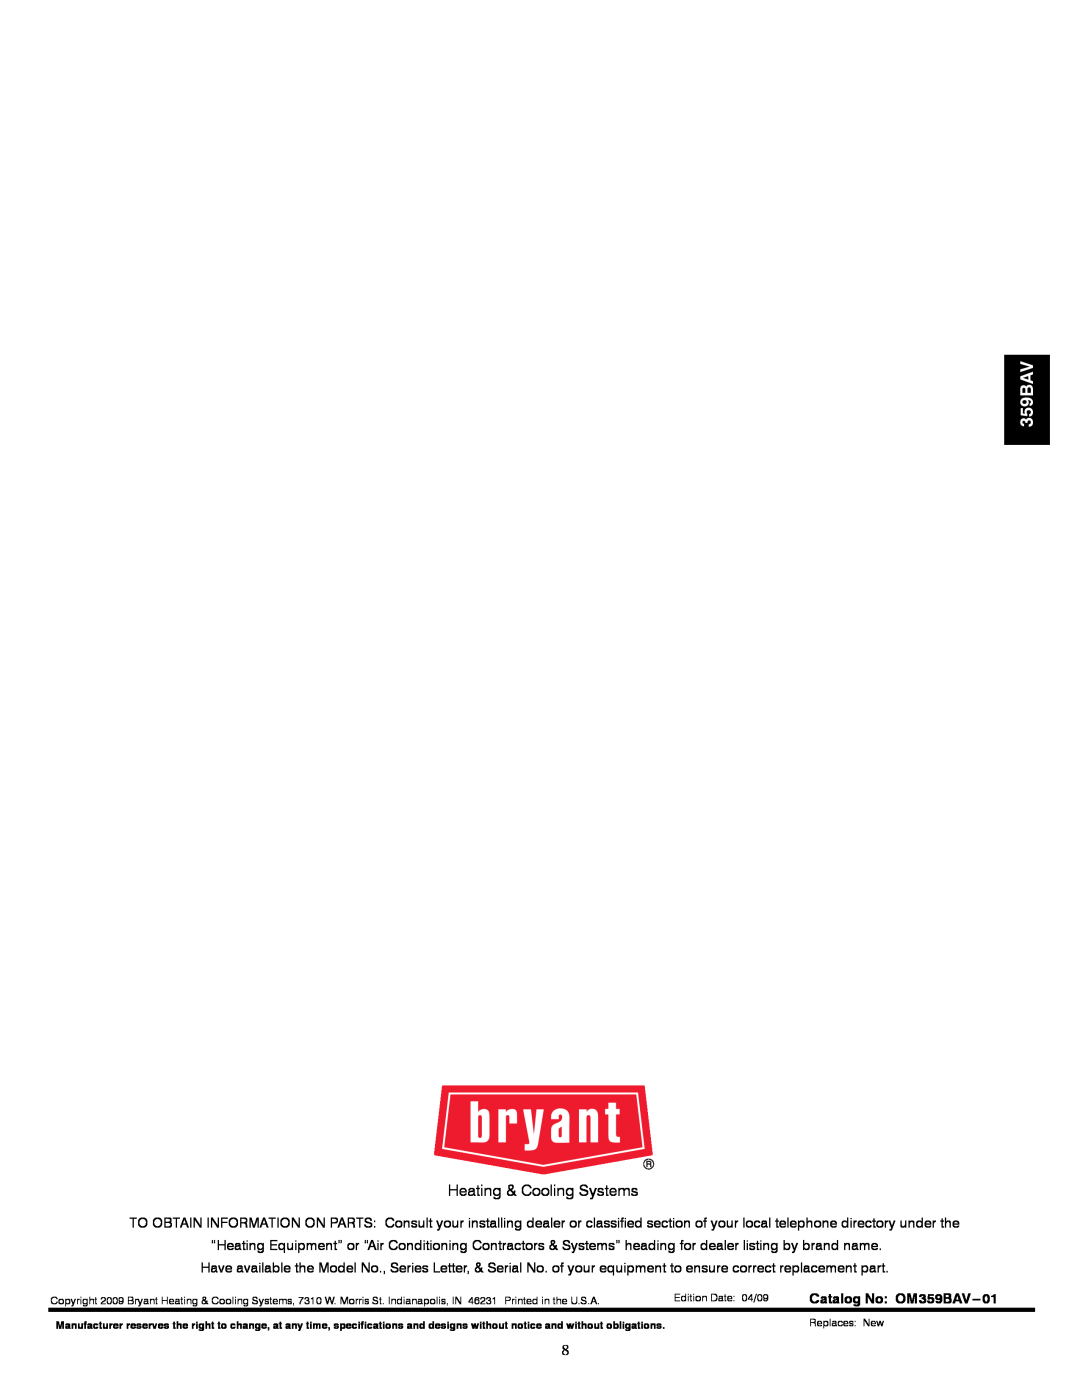 Bryant owner manual Heating & Cooling Systems, Catalog No OM359BAV---01 